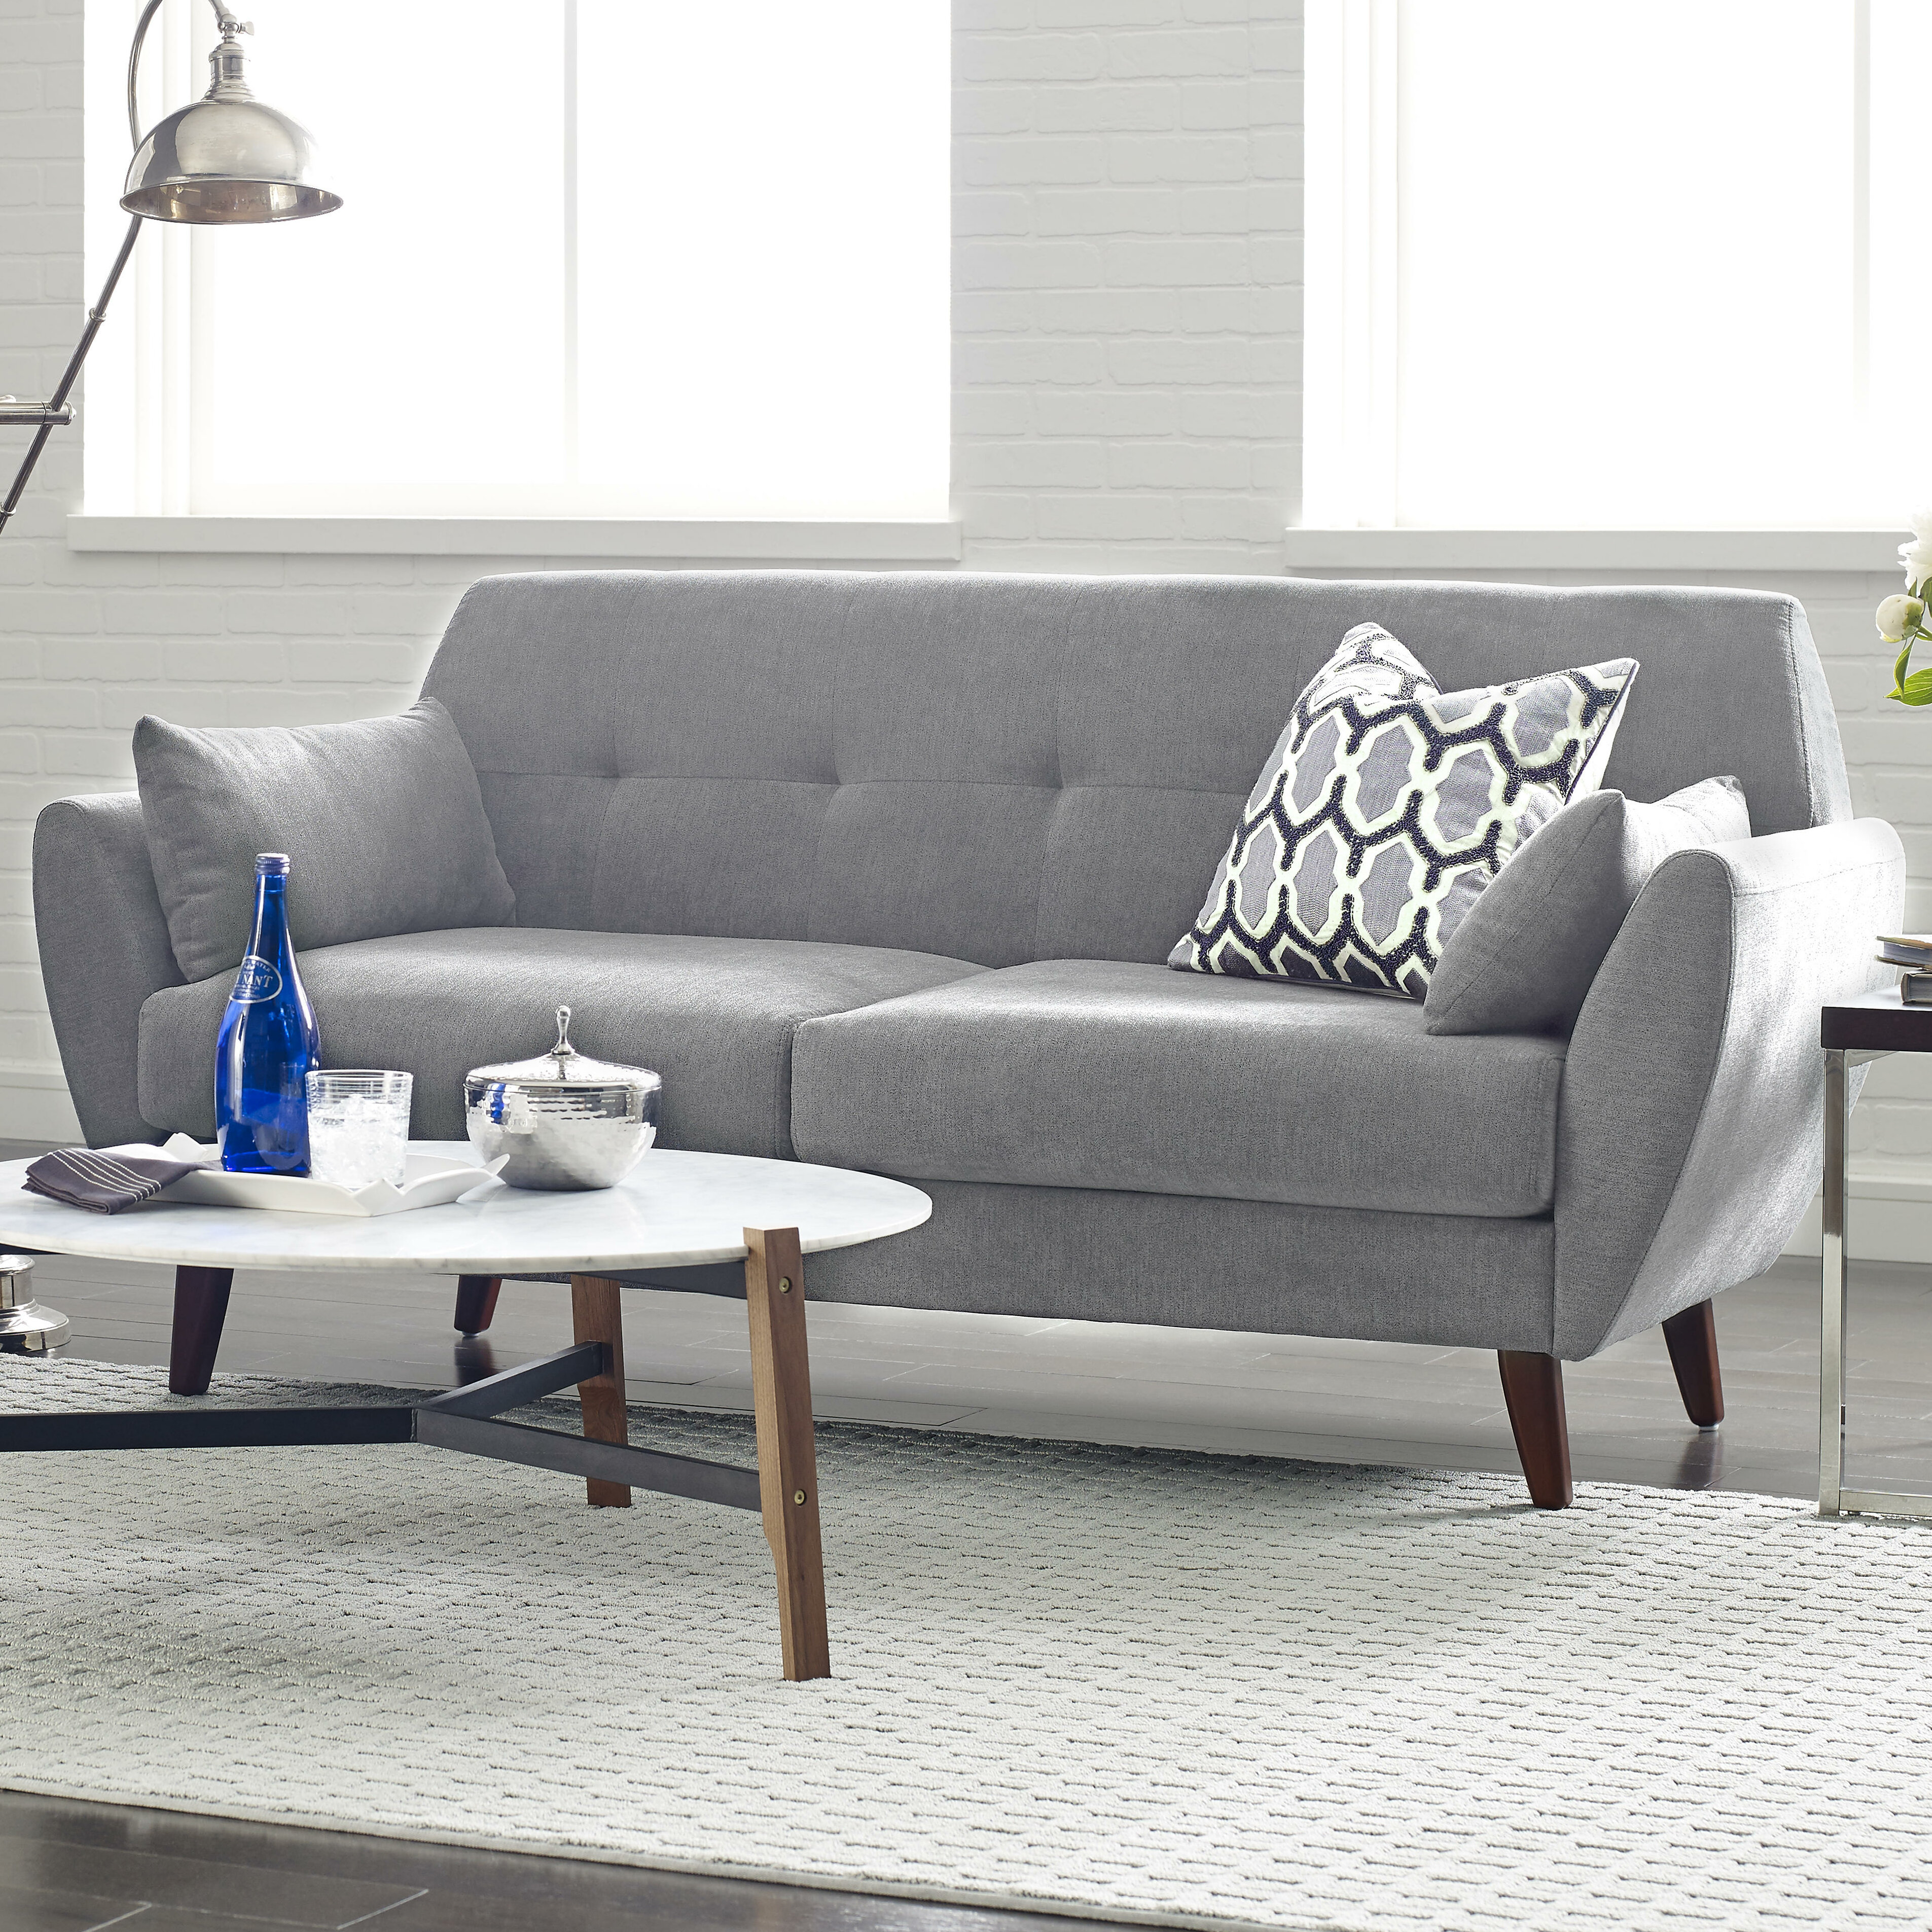 Serta At Home Artesia Configurable Living Room Set Reviews Wayfair